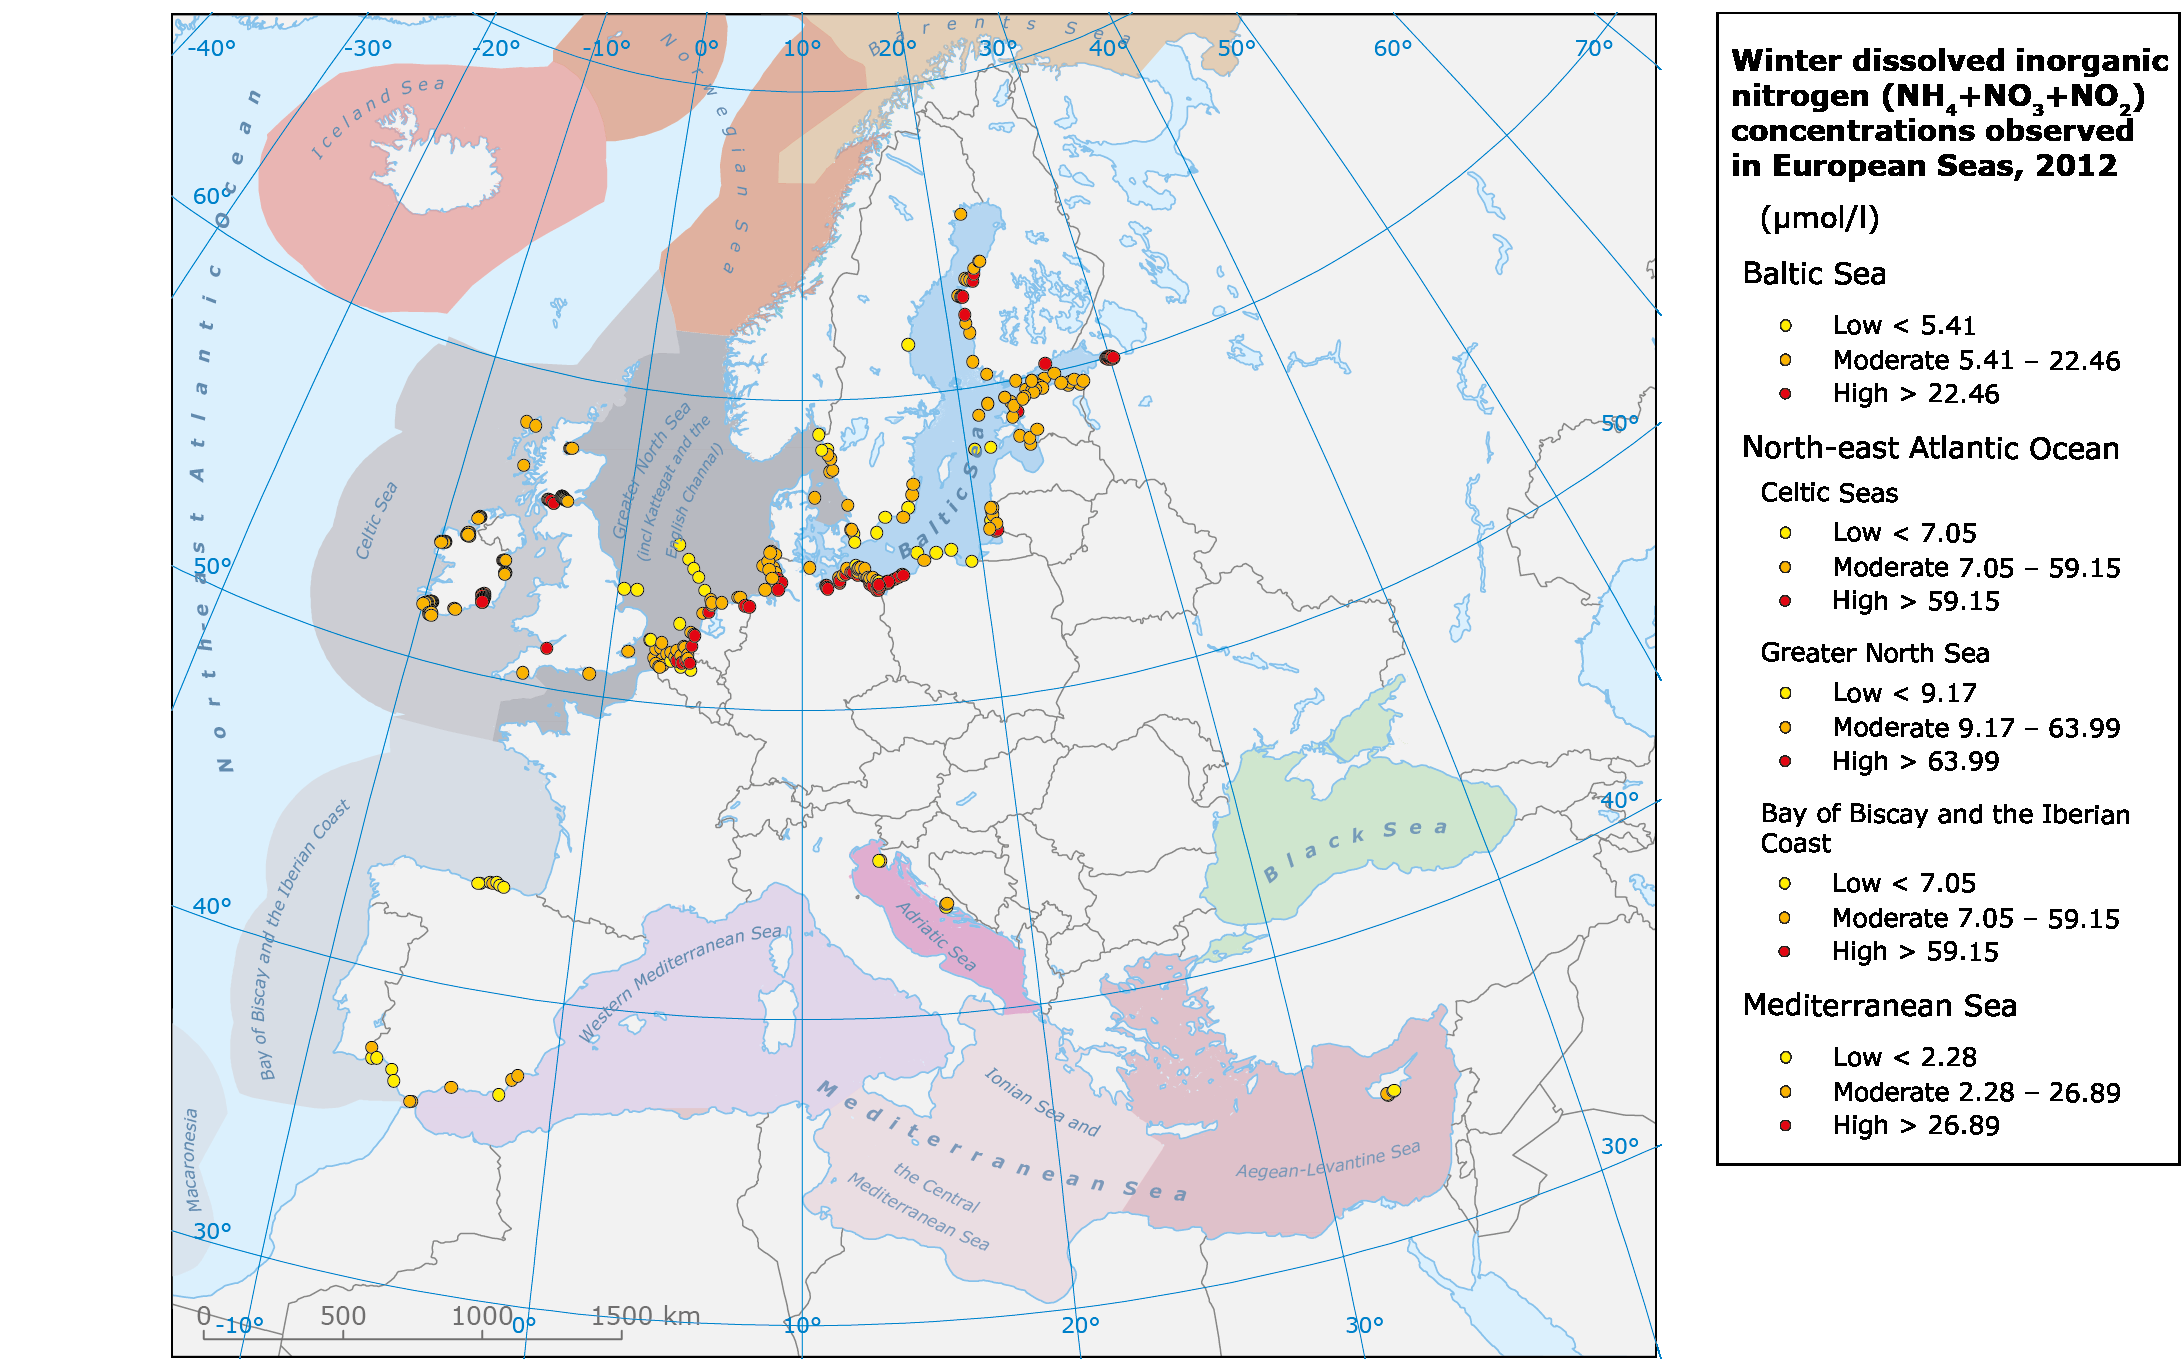 Dissolved inorganic nitrogen concentrations in European seas